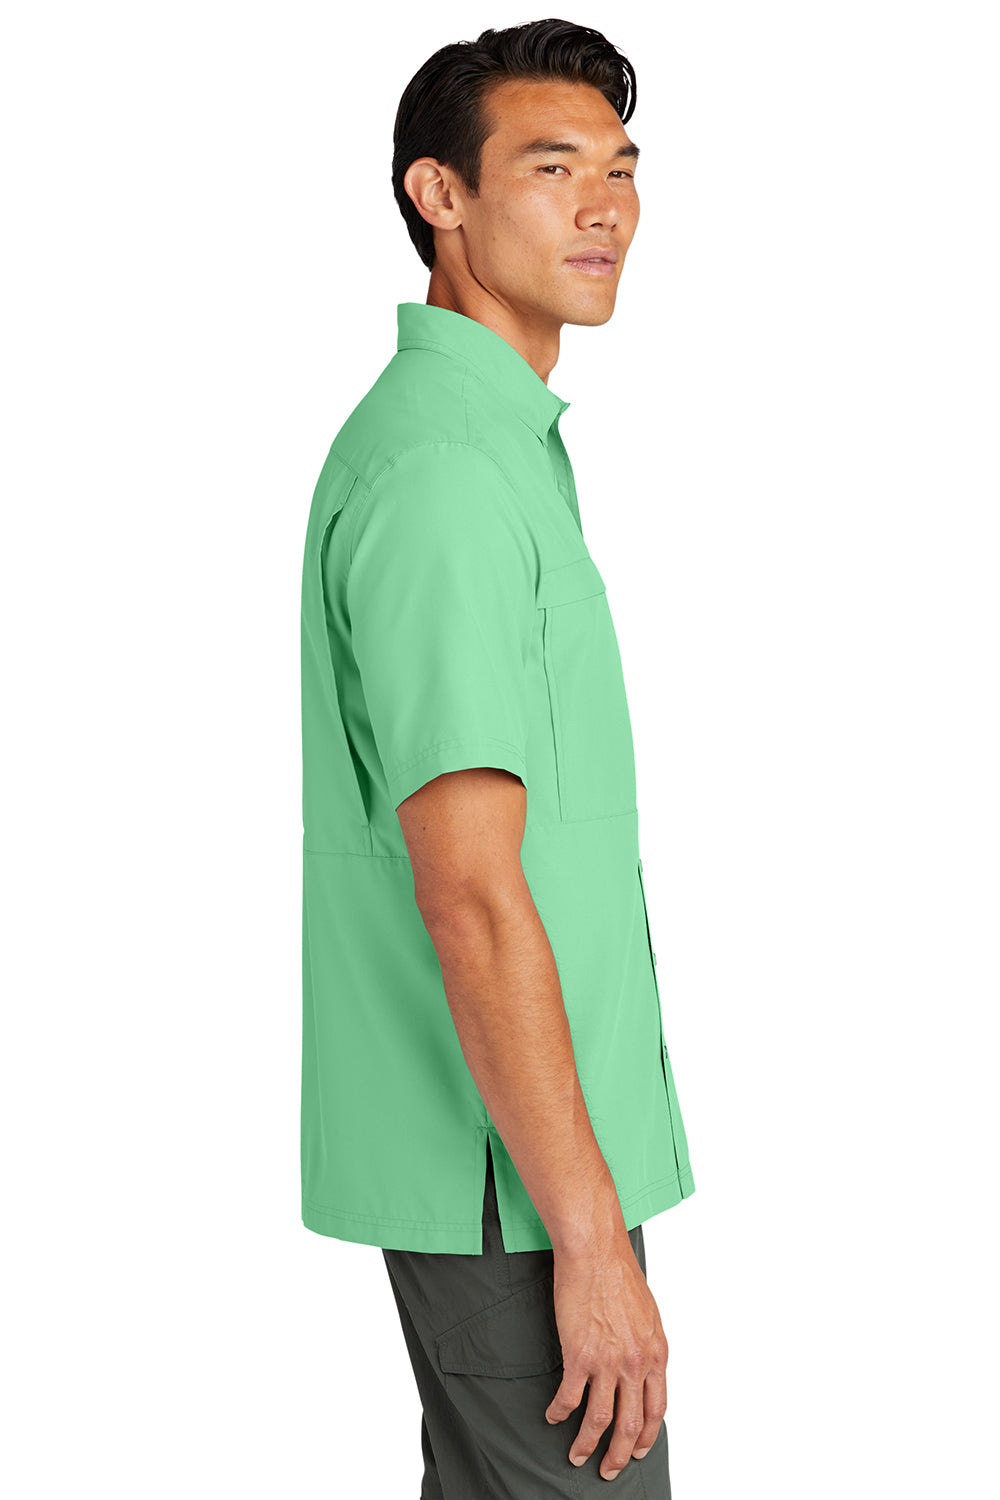 Port Authority W961 Mens Daybreak Moisture Wicking Short Sleeve Button Down Shirt w/ Double Pockets Bright Seafoam Green SIde